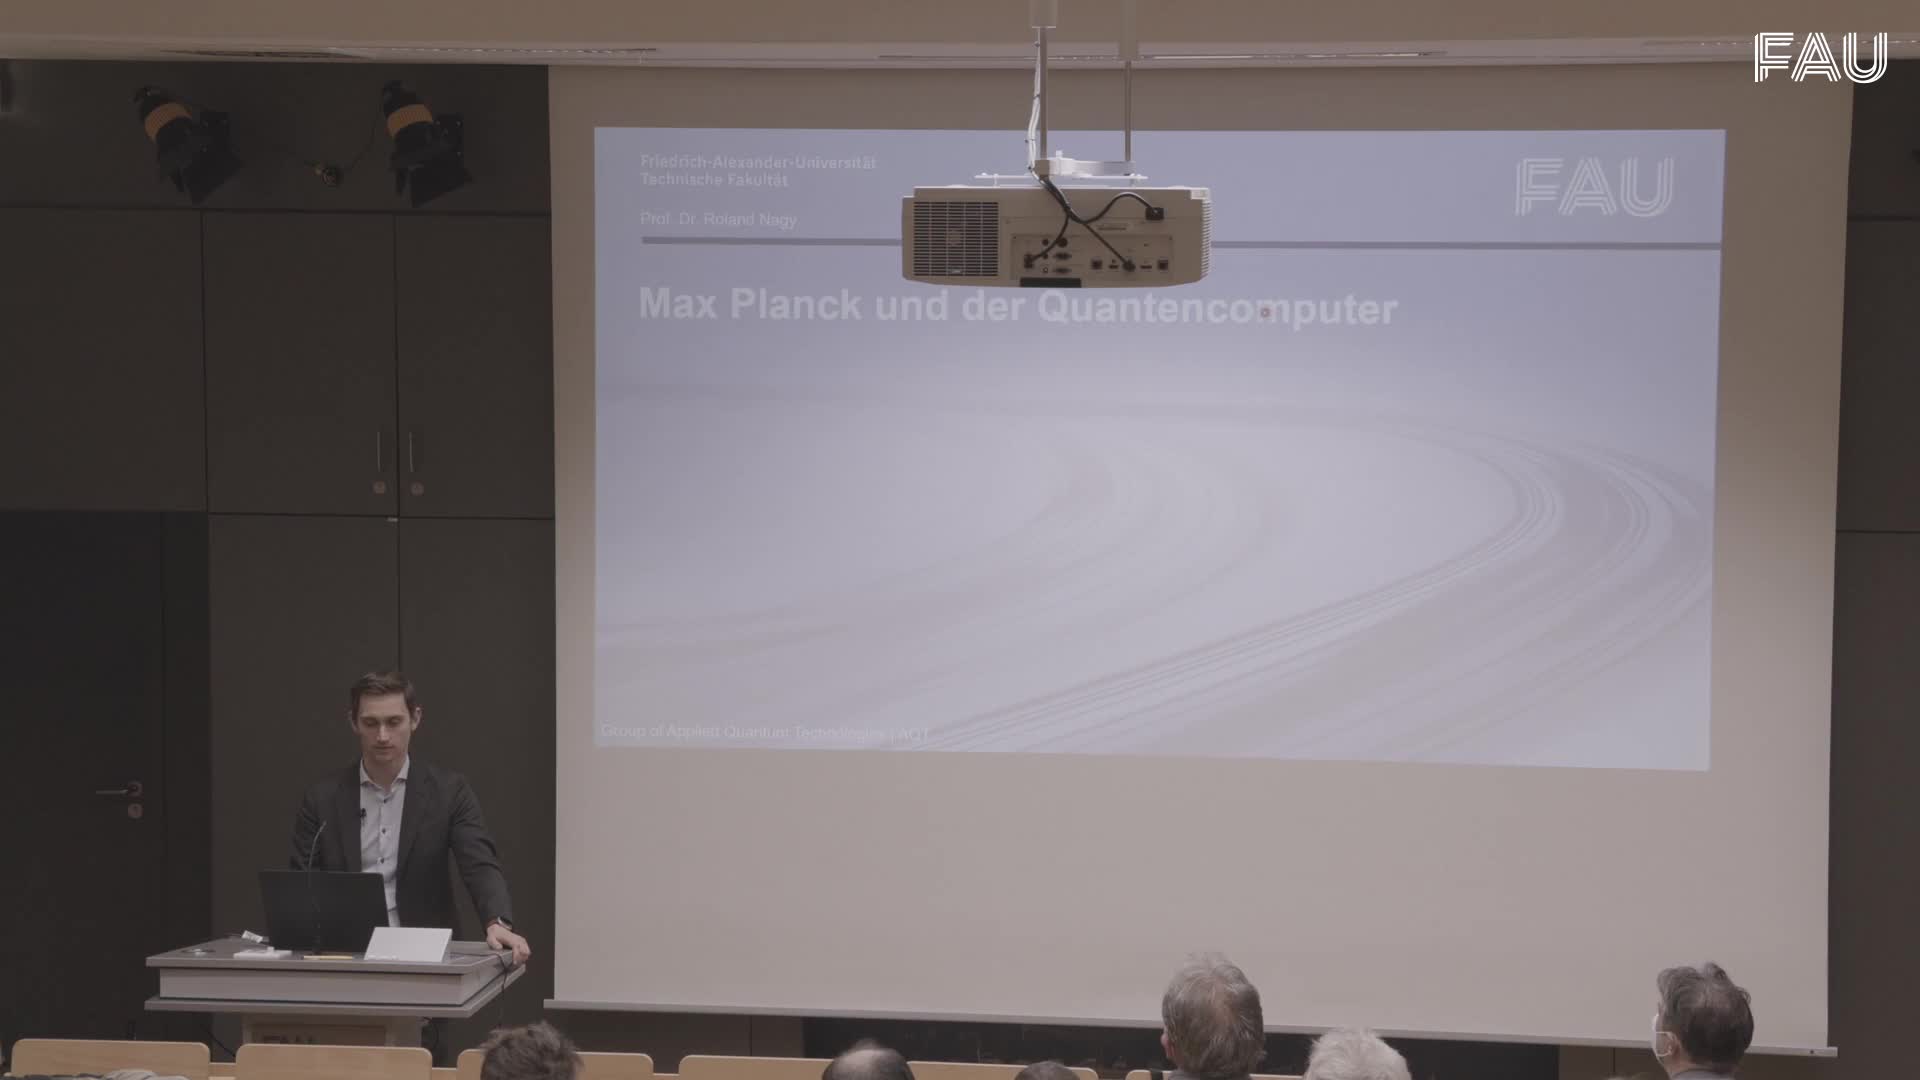 Max Planck und der Quantencomputer preview image